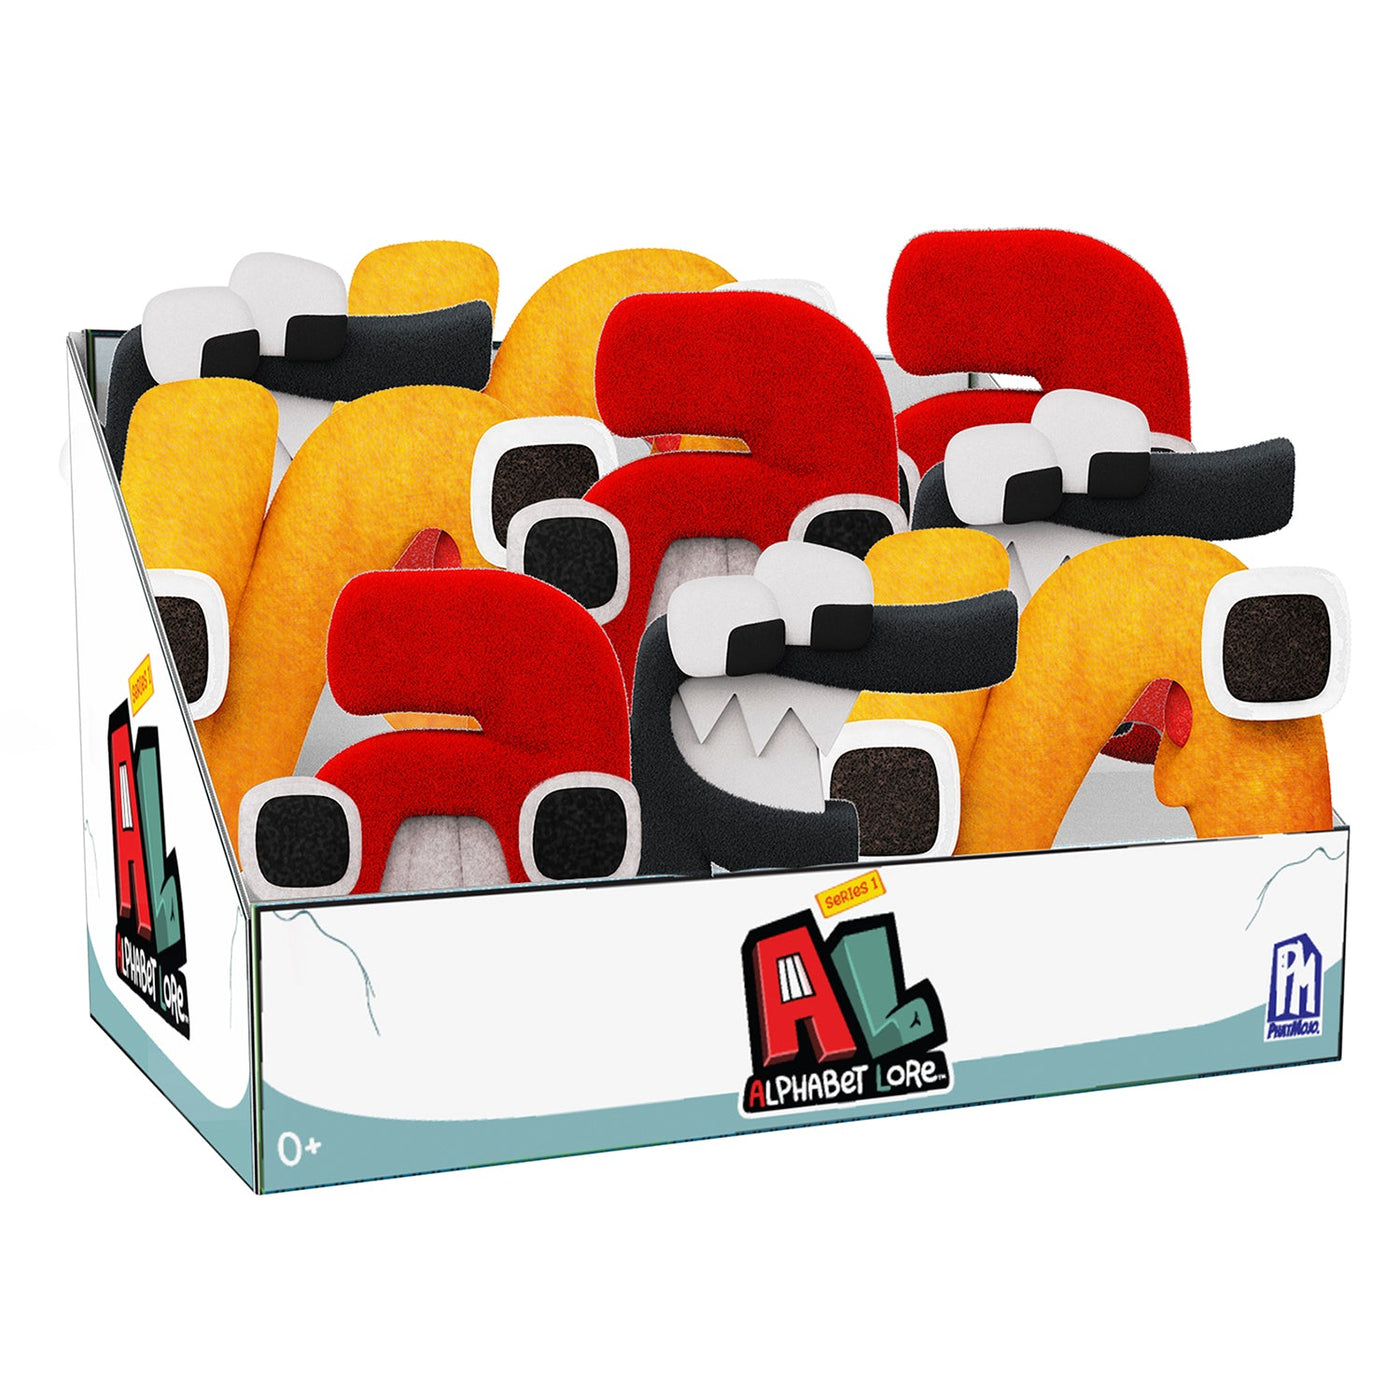 PhatMojoAlphabet Lore 8" Collectable Plush AssortmentProduct: feisty FPlush ToysEarthlets